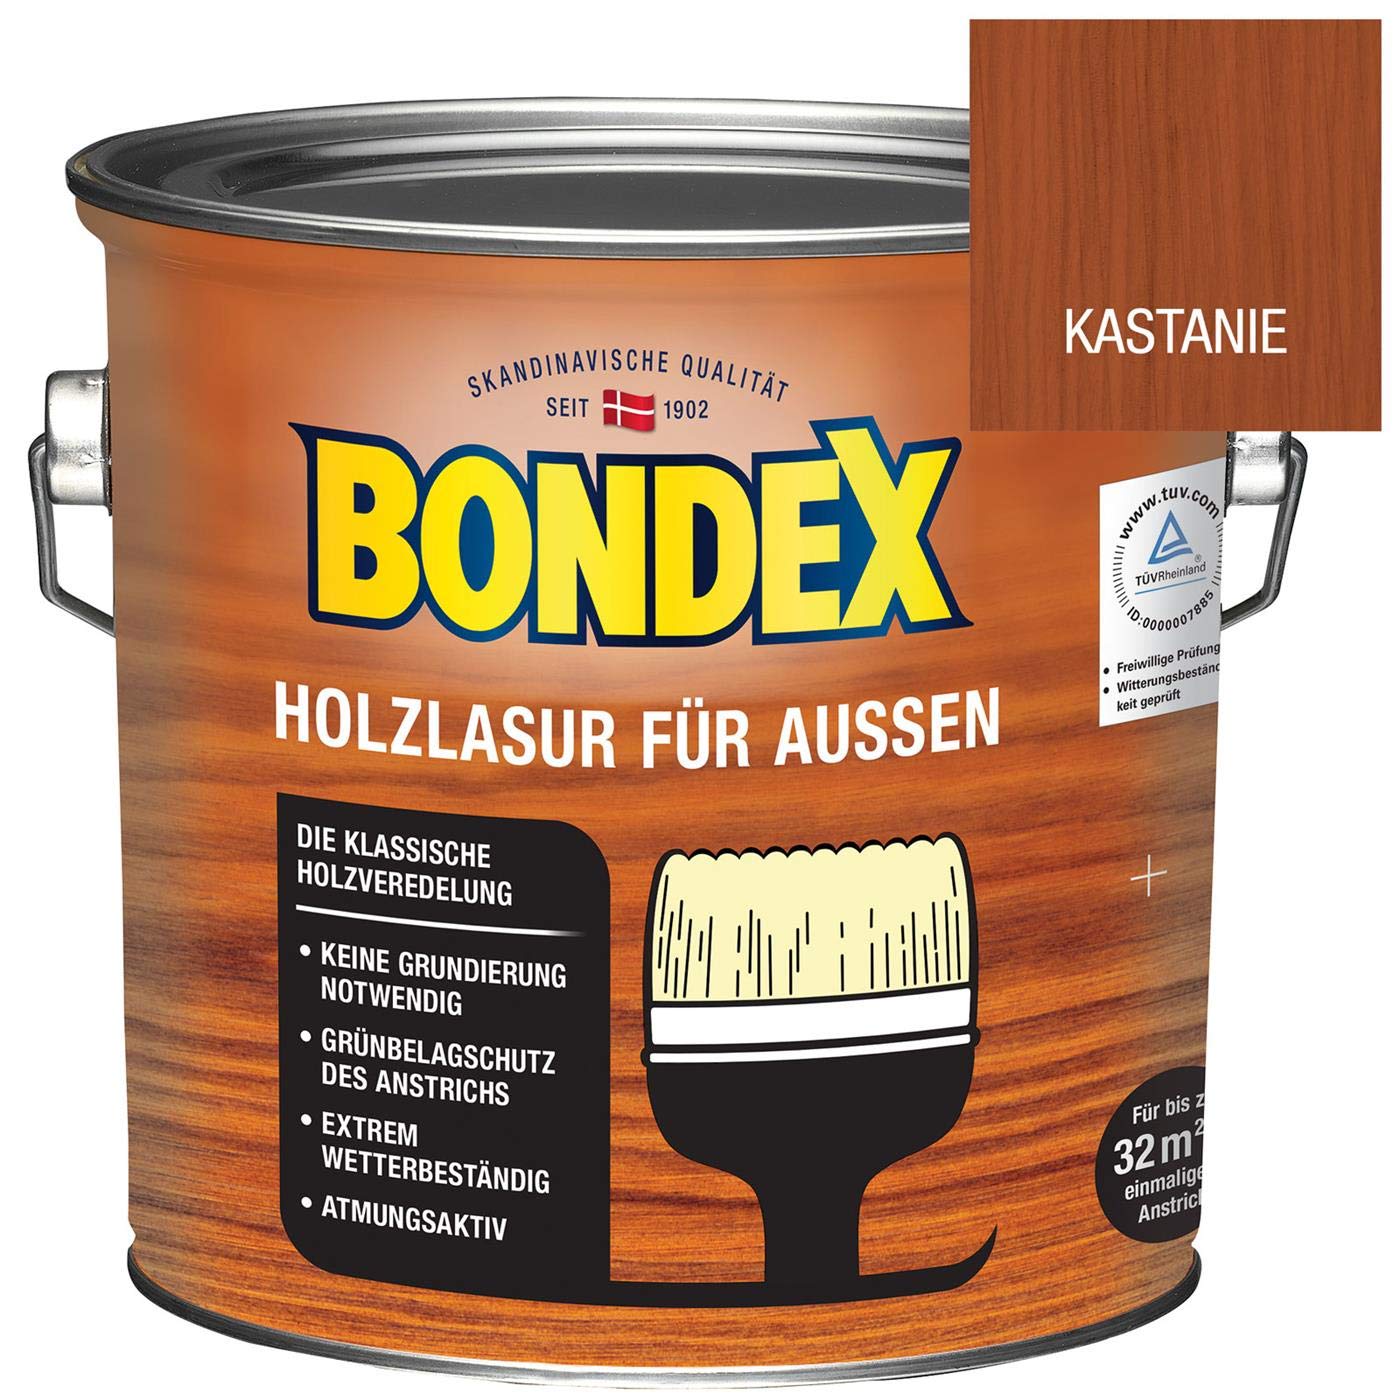 Bondex Holzlasur für Aussen kastanie 2,5L Holzschutzlasur Holz Lasur